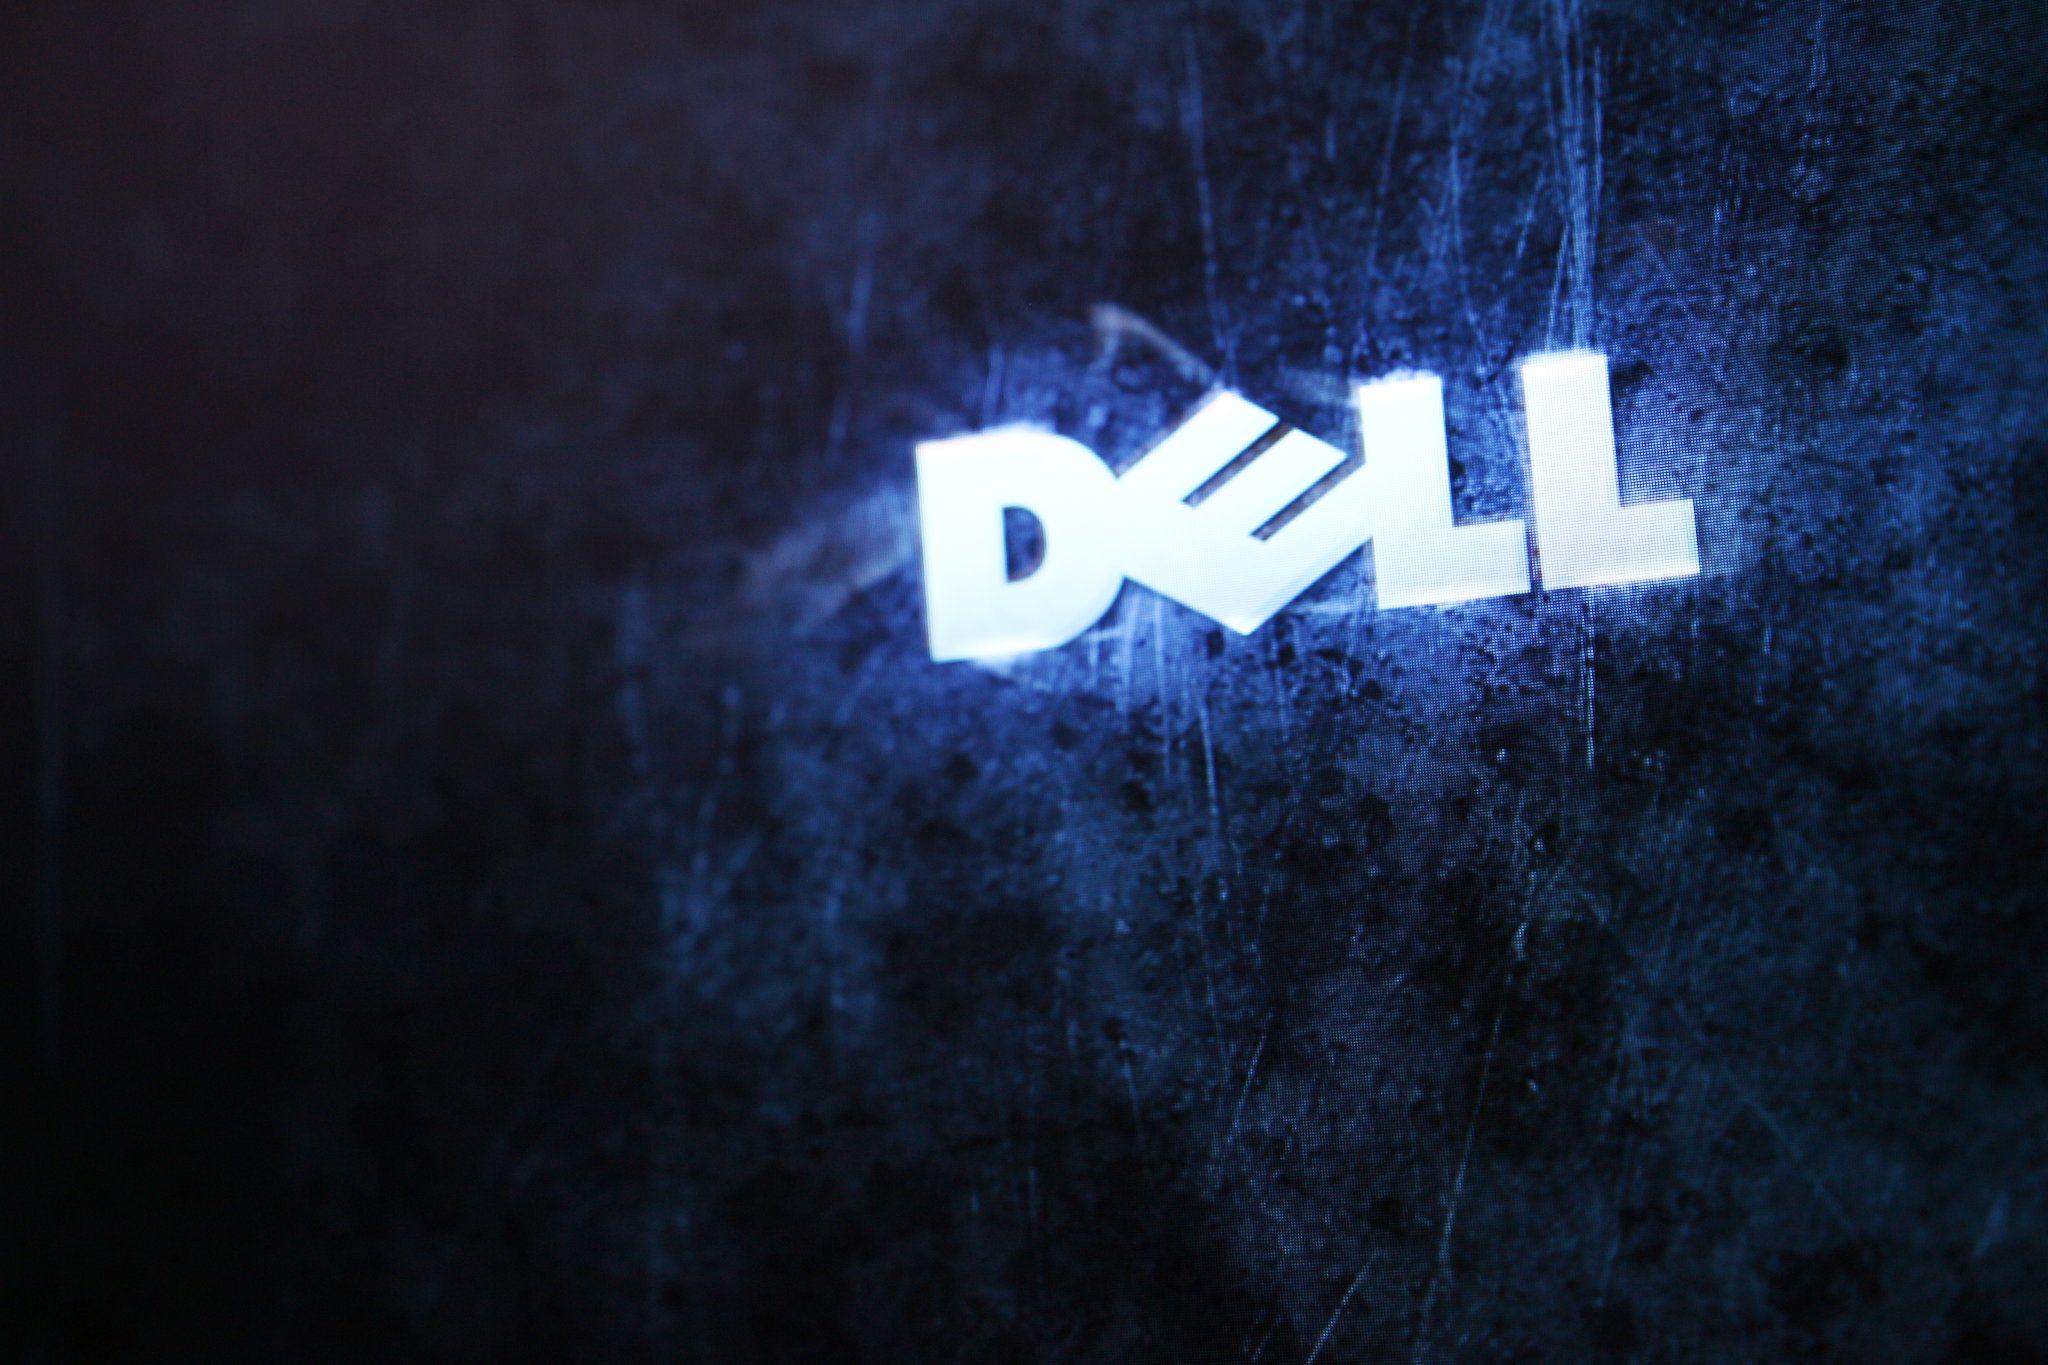 Dell Wallpaper HD